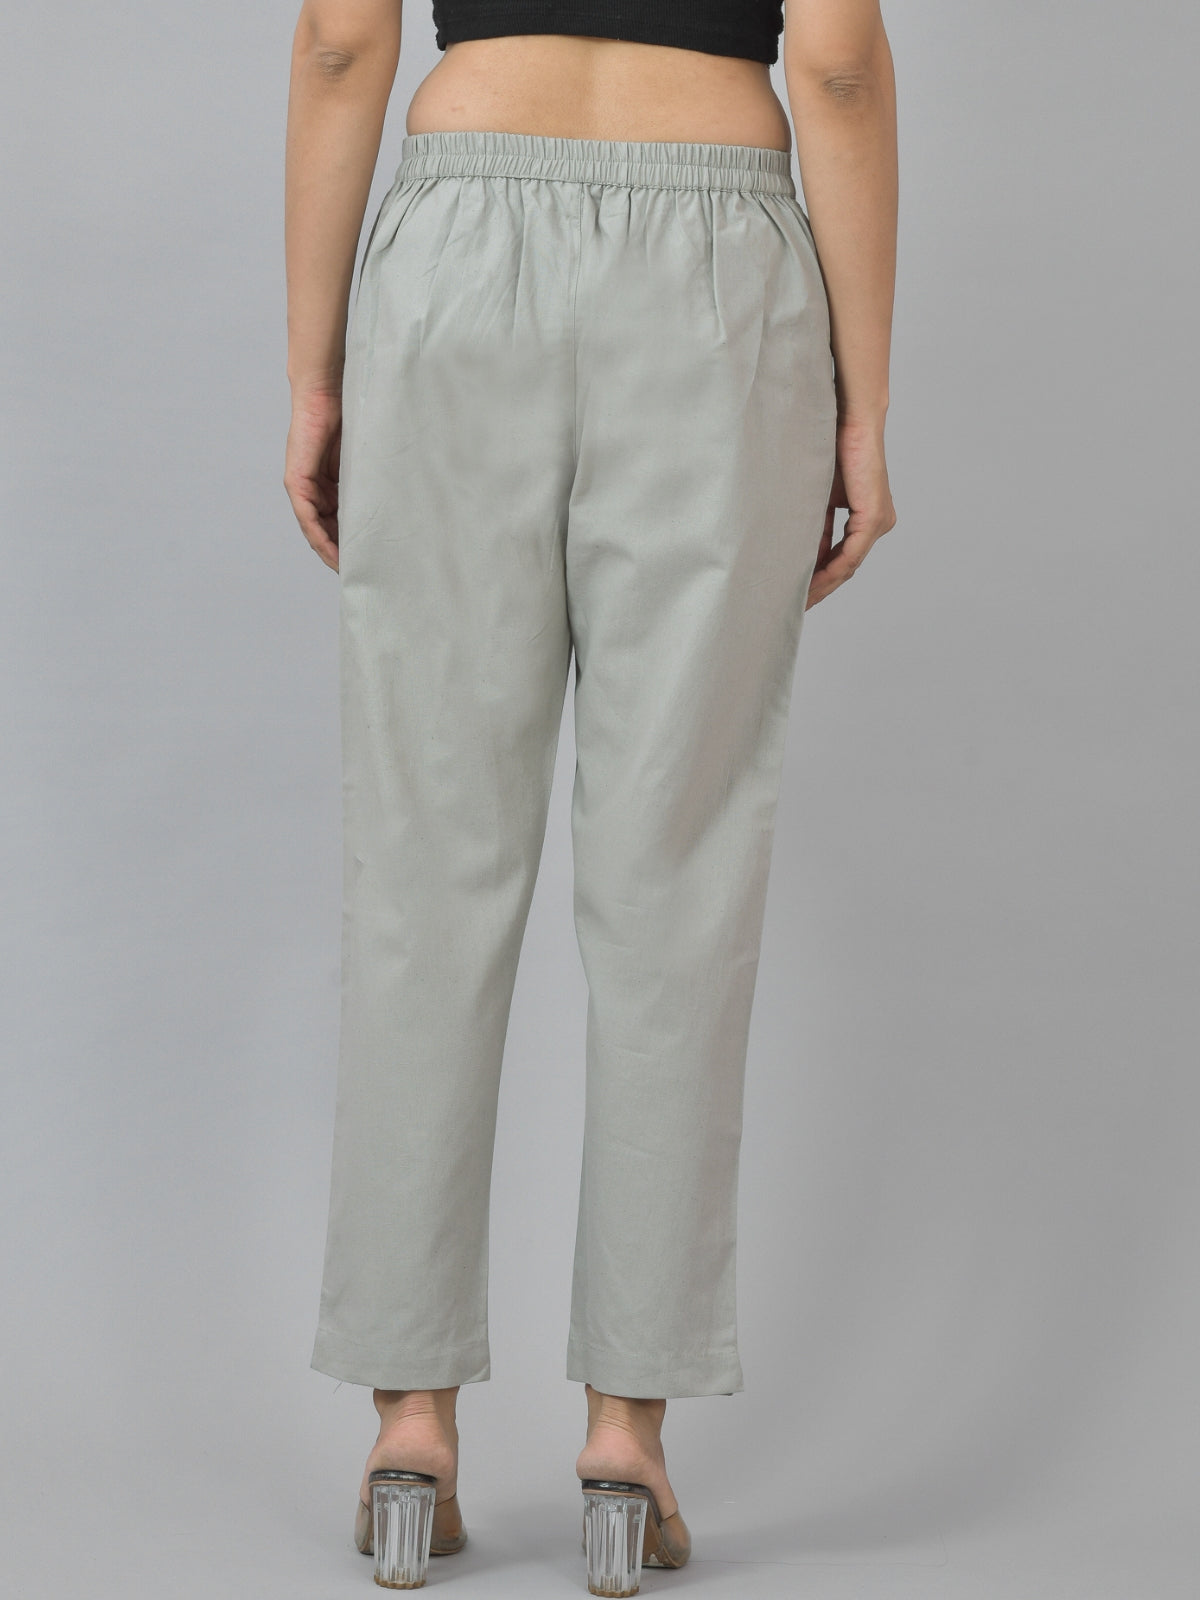 Pack Of 2 Womens Half Elastic Brown And Light Grey Deep Pocket Cotton Pants